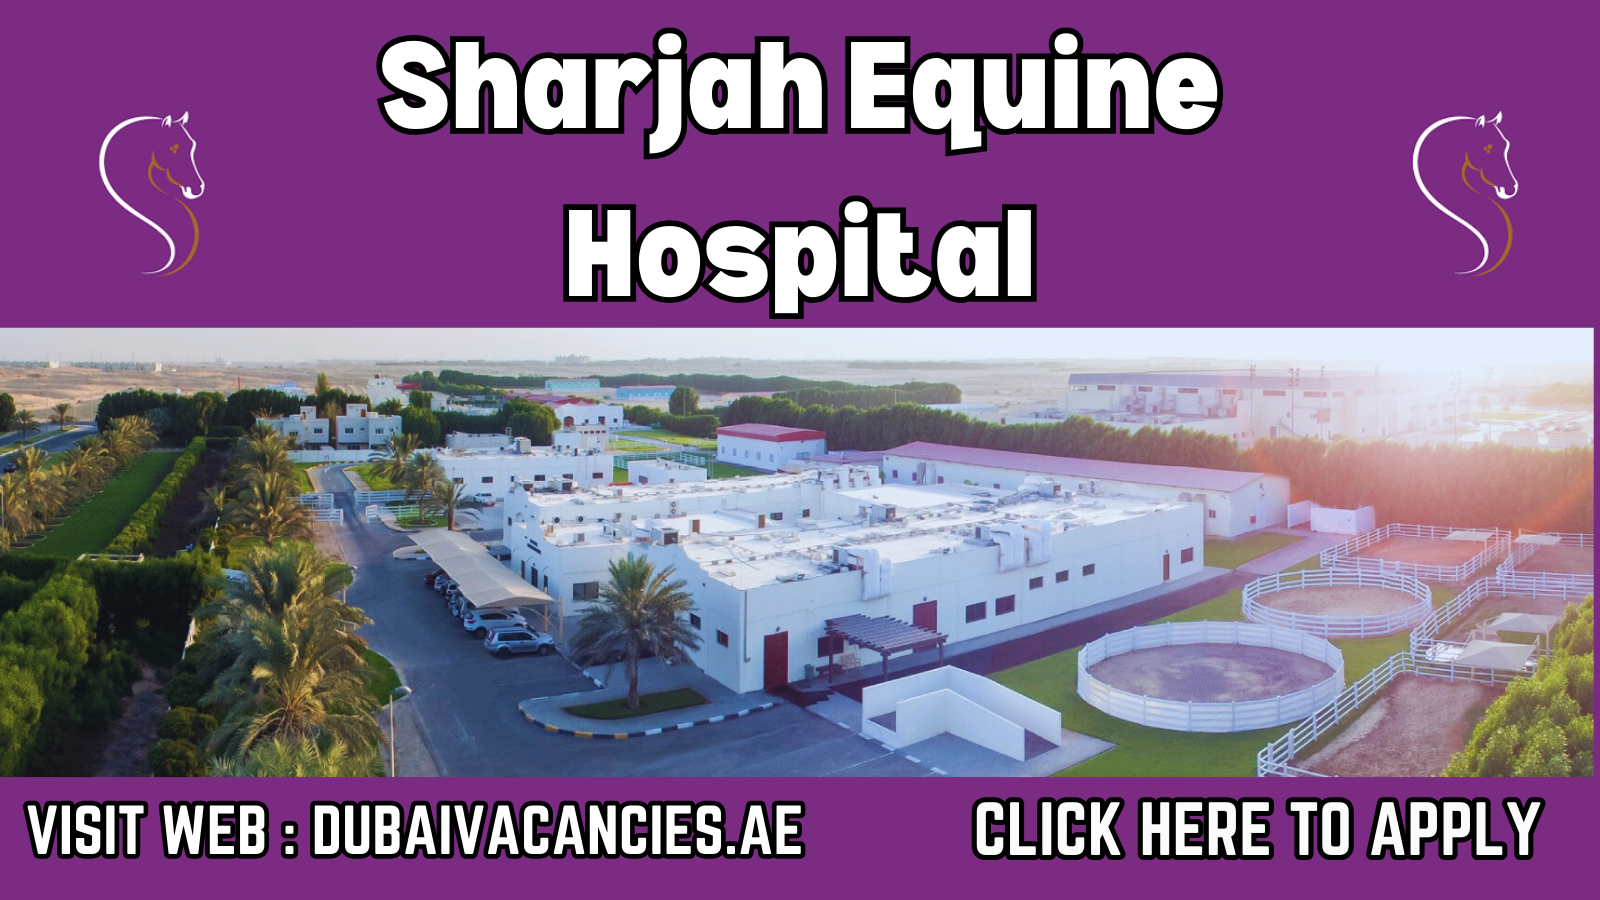 Sharjah Equine Hospital Careers 